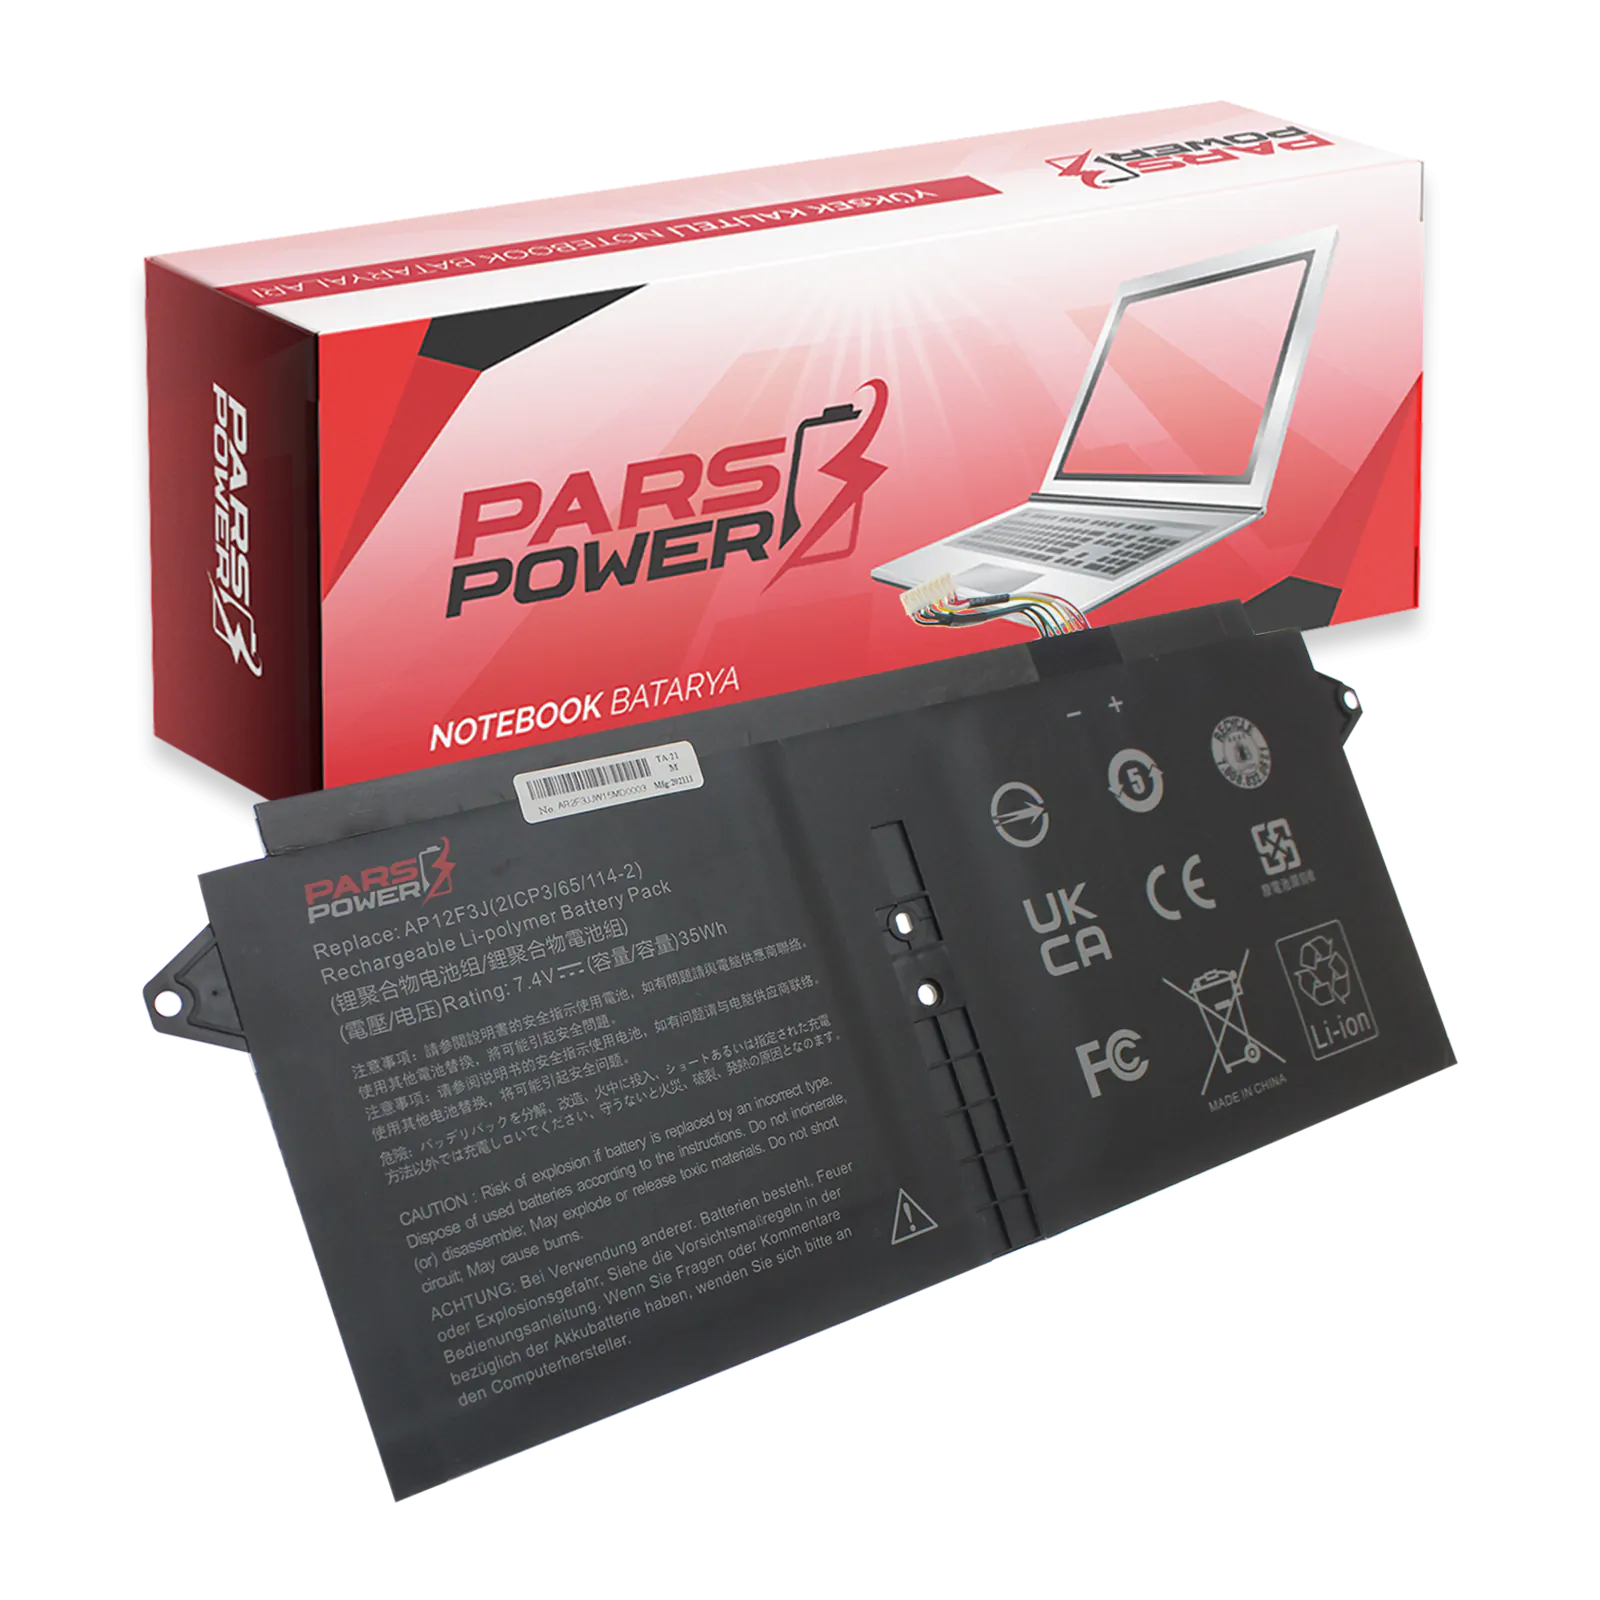 Acer Aspire S7-392 Serisi Notebook Batarya - Pil (Pars Power)